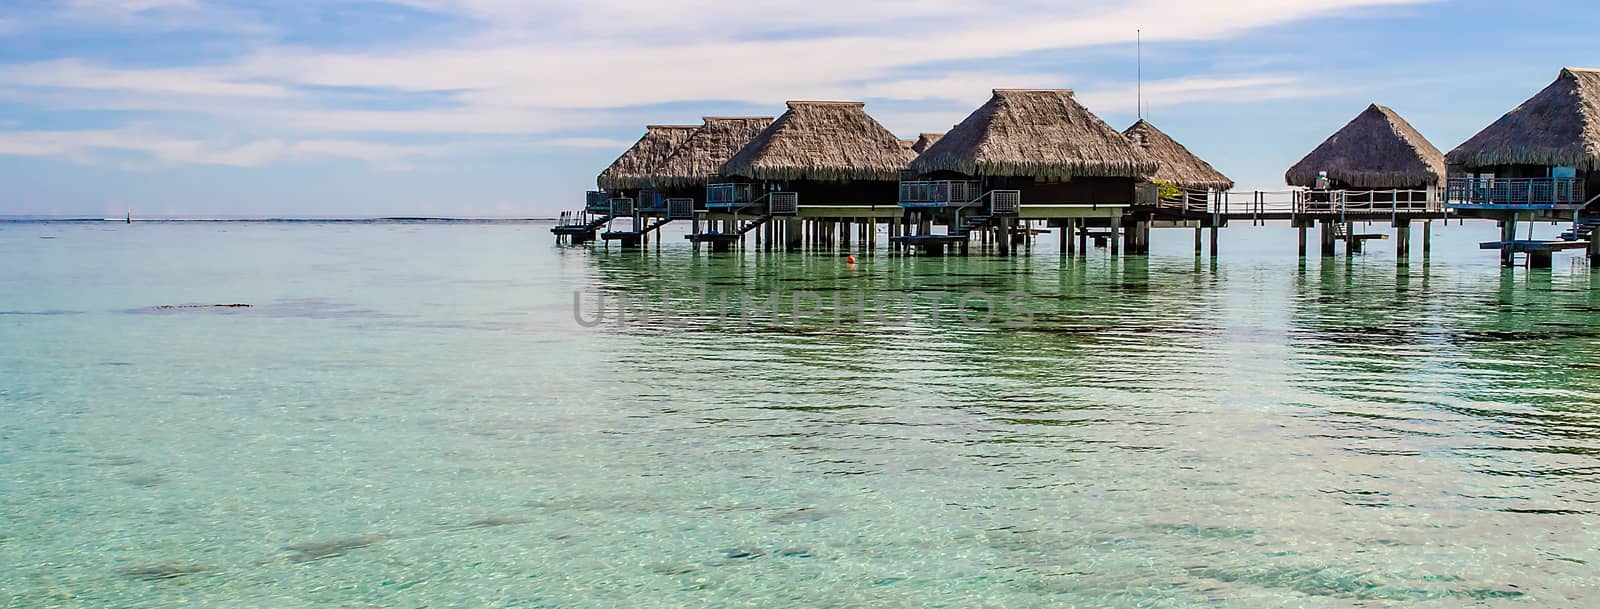 Overwater bungalows, French Polynesia by marcorubino